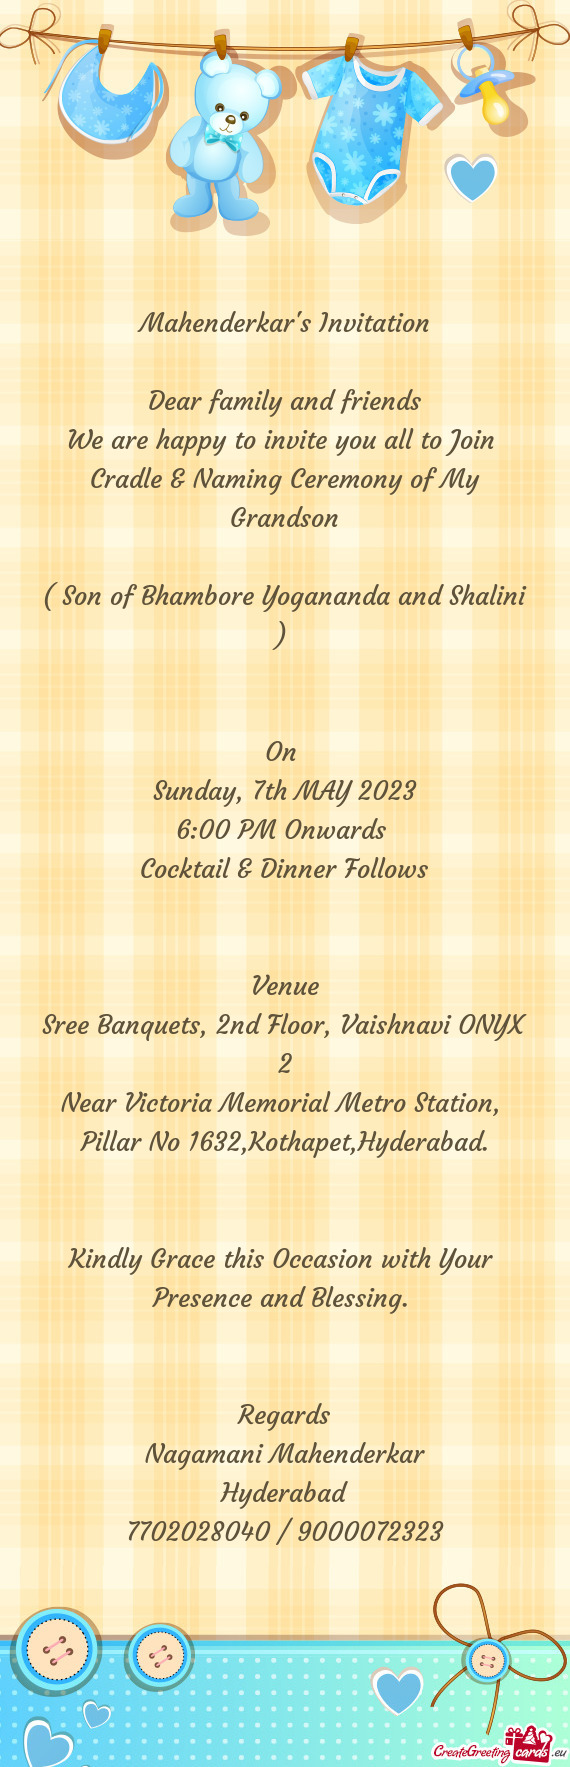 Sree Banquets, 2nd Floor, Vaishnavi ONYX 2